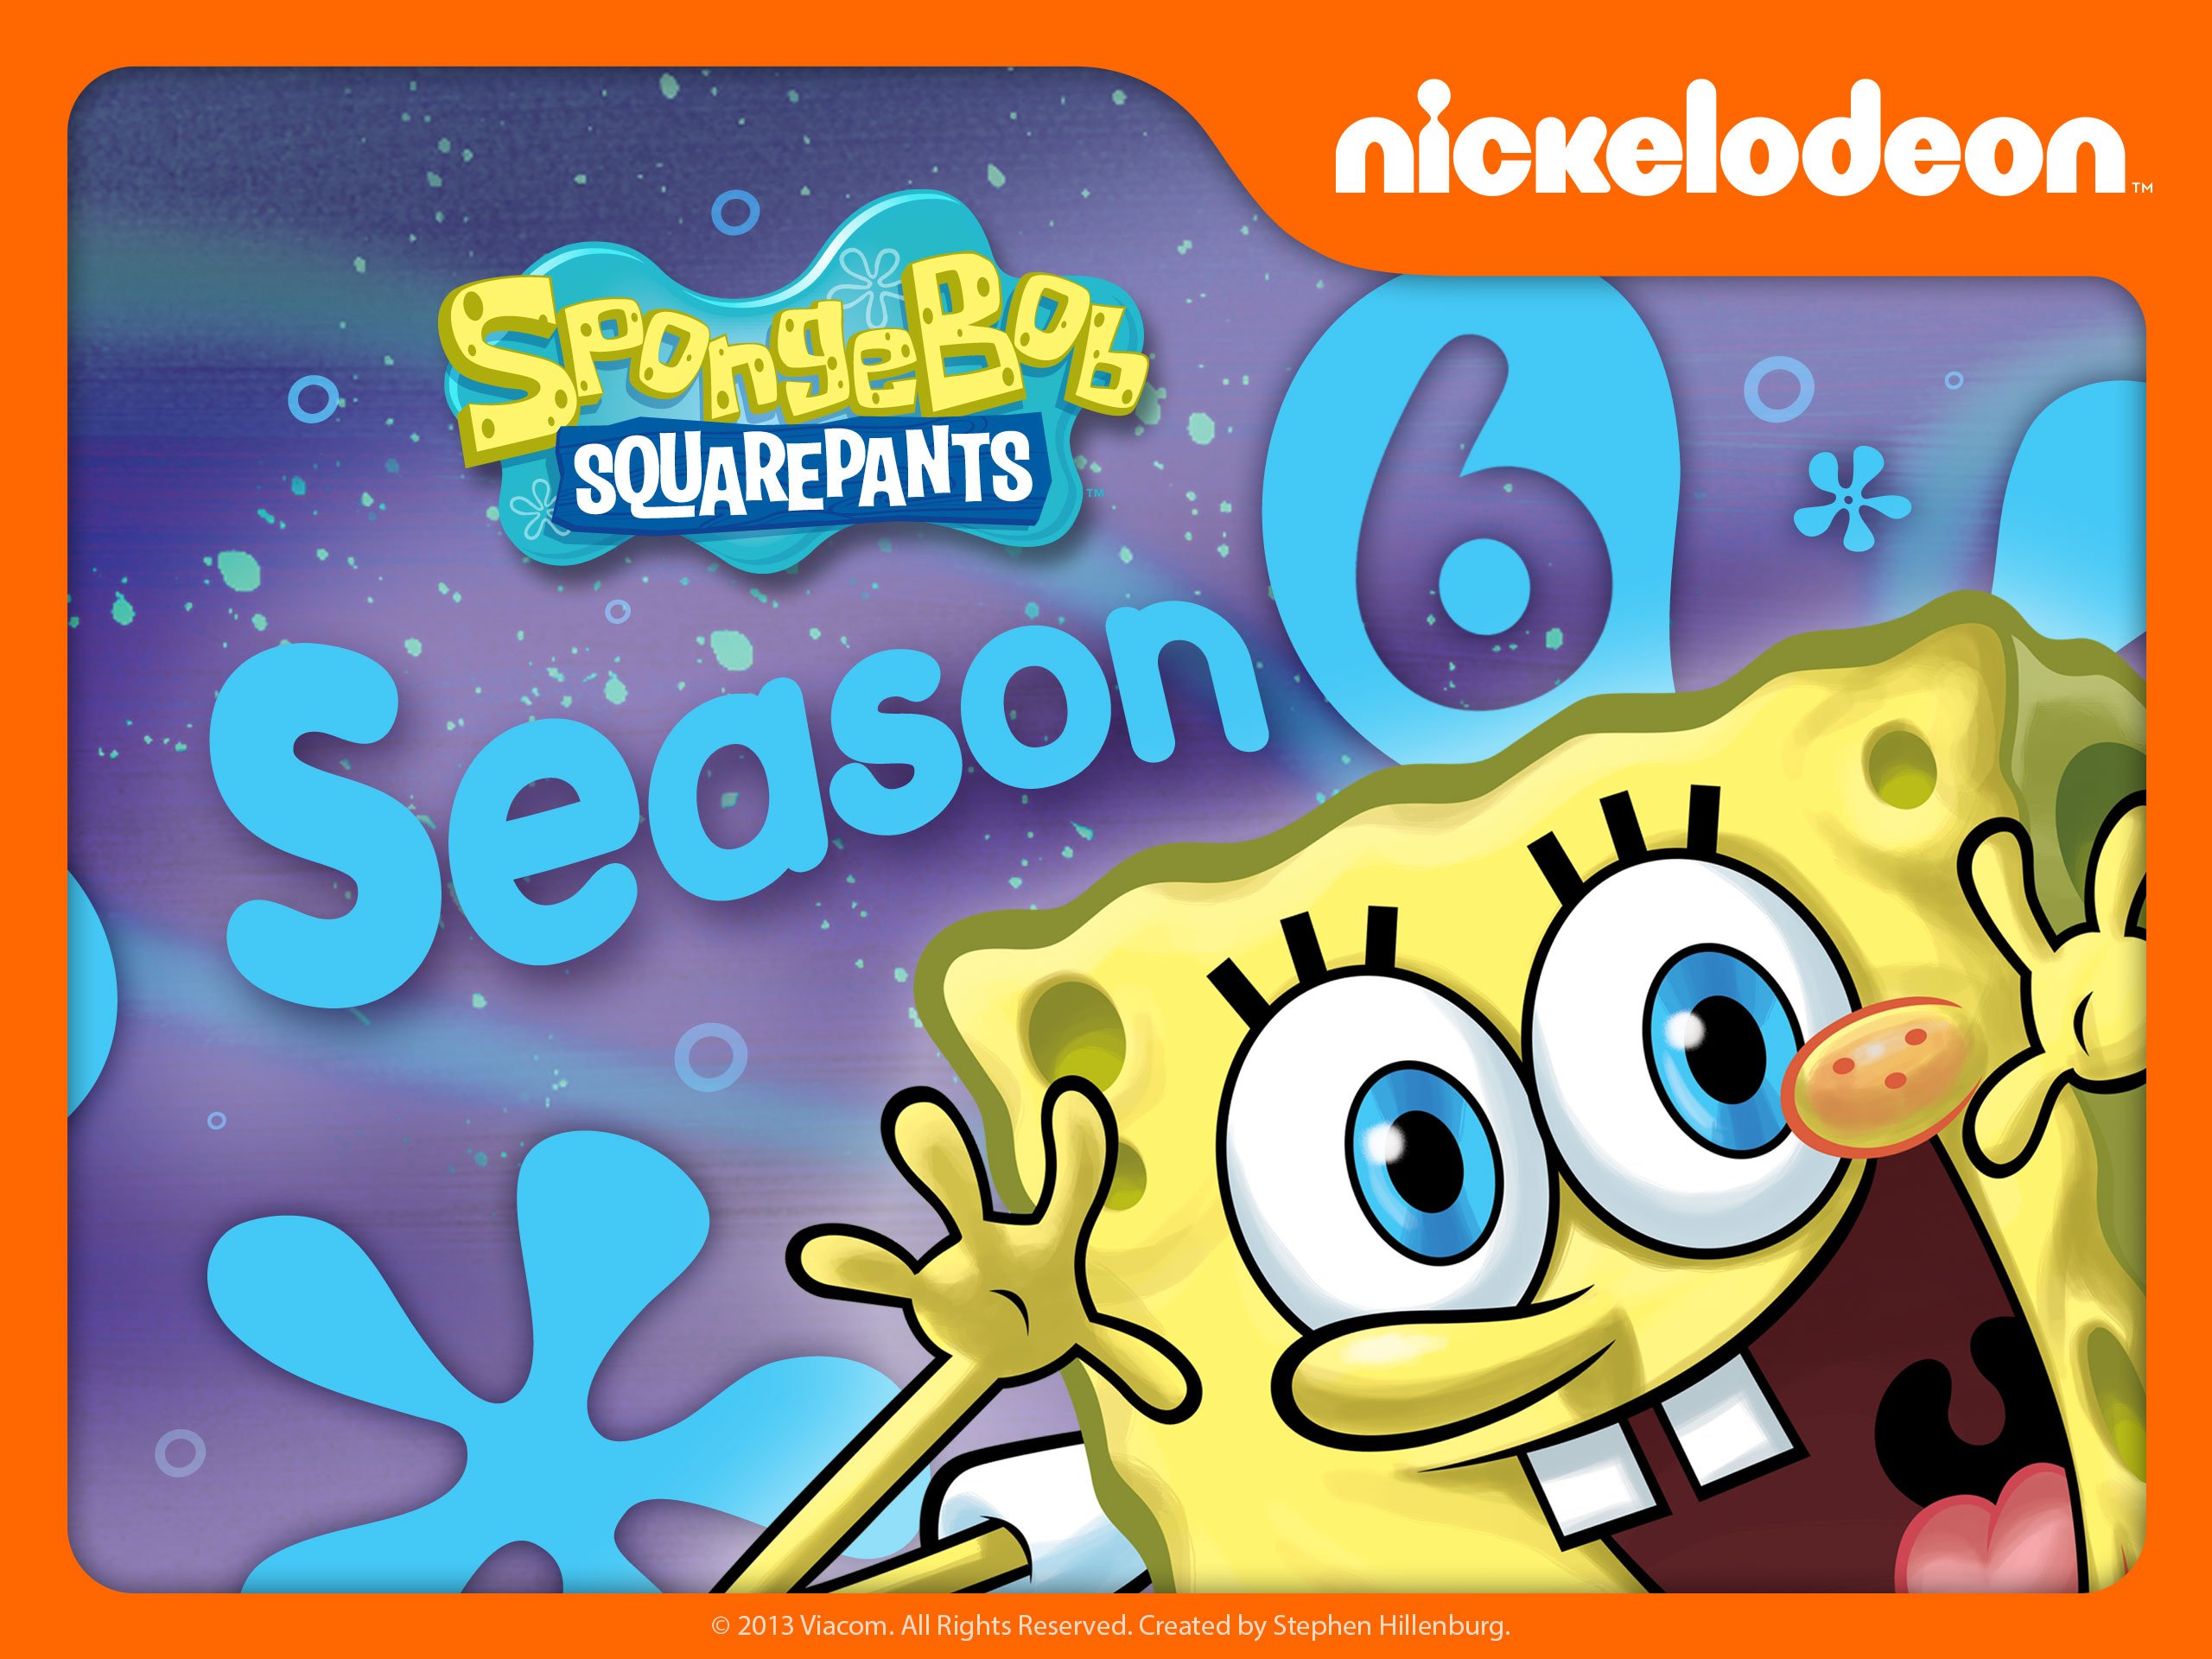 SpongeBob SquarePants (season 1) - Wikipedia